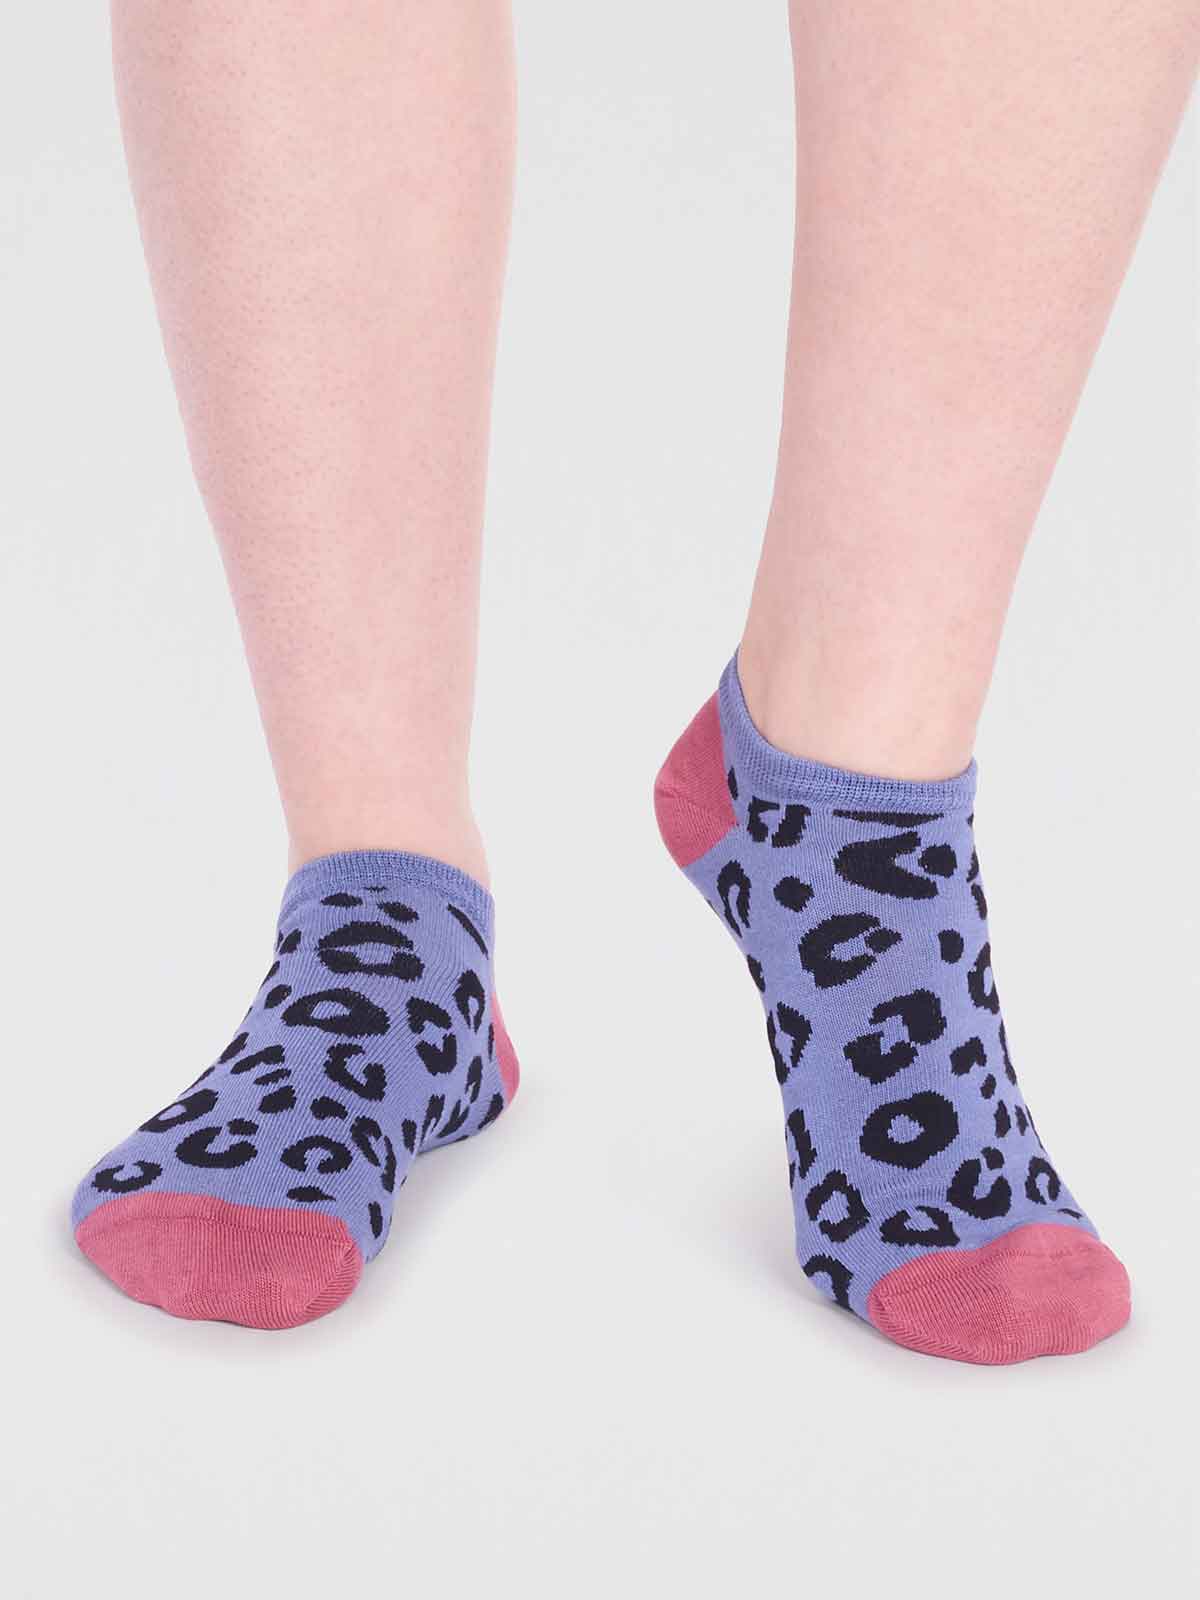 Reese Bamboo Leopard Print Trainer Socks - Periwinkle Blue